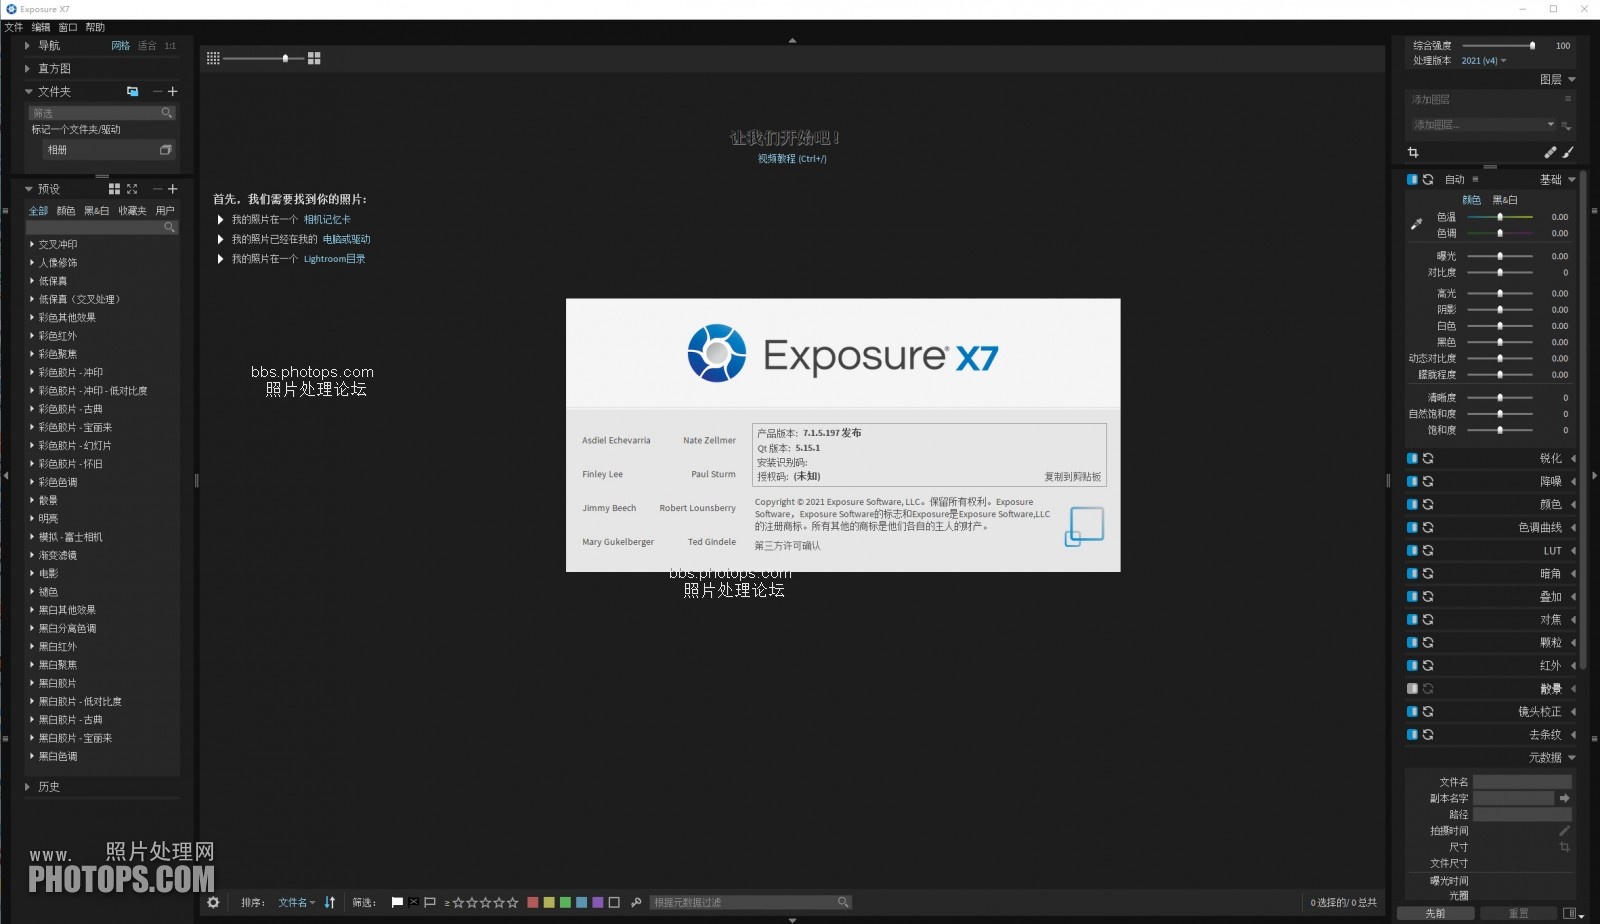 Exposure X7 7.1.8.9 + Bundle for mac download free